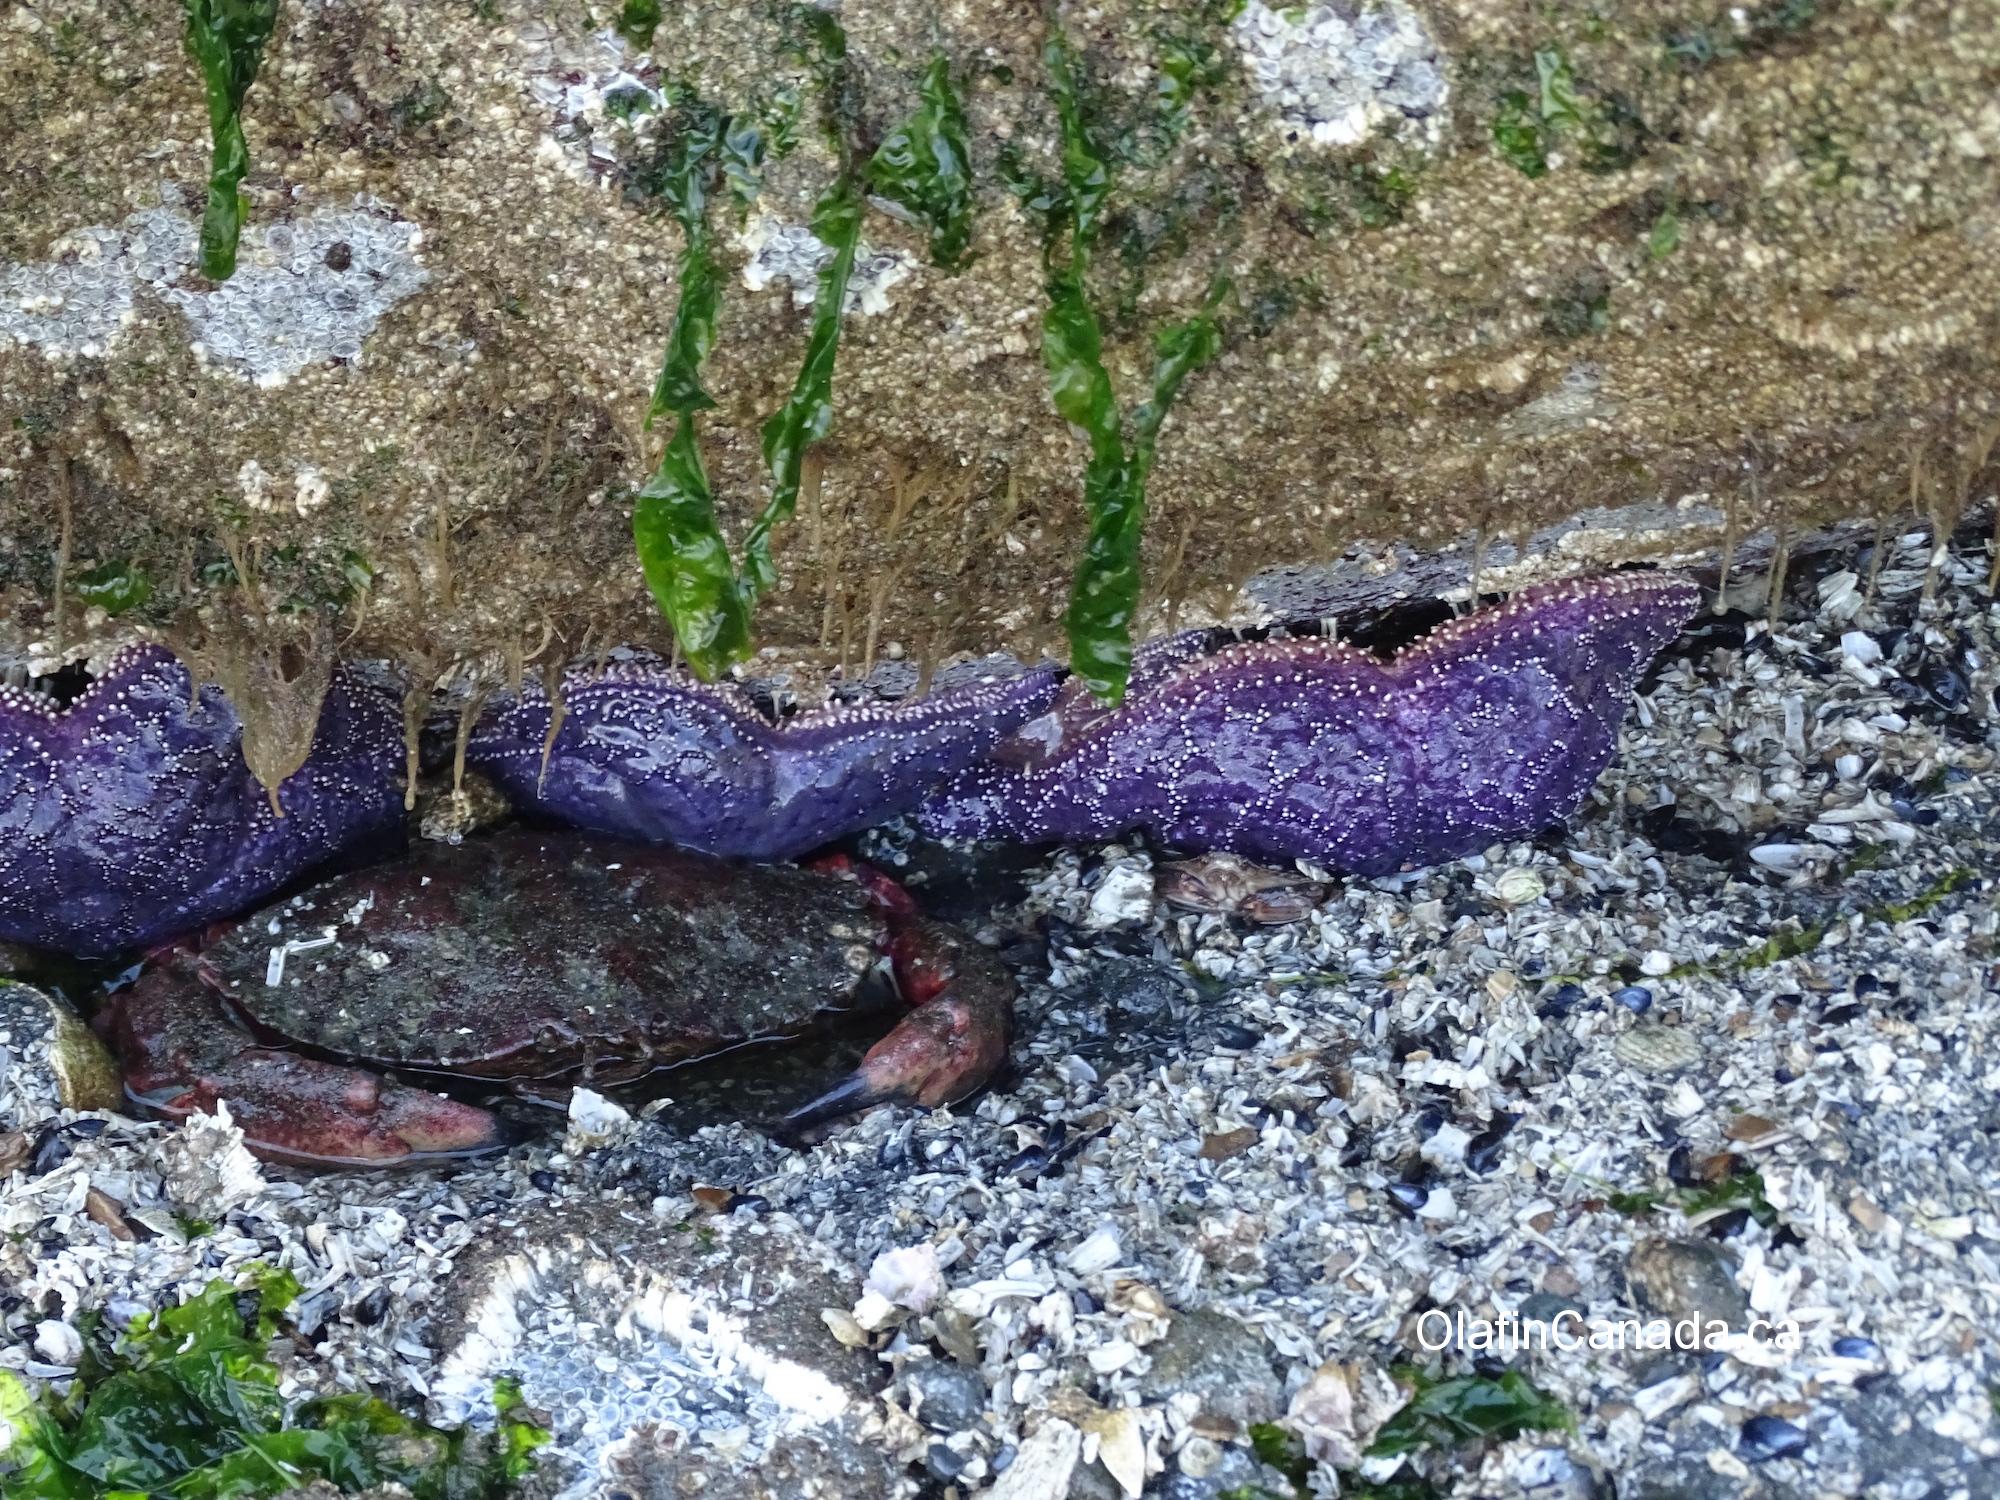 Crab hiding under a rock on Vancouver Island, together with purple sea stars #olafincanada #britishcolumbia #discoverbc #wildlife #crab #vancouverisland